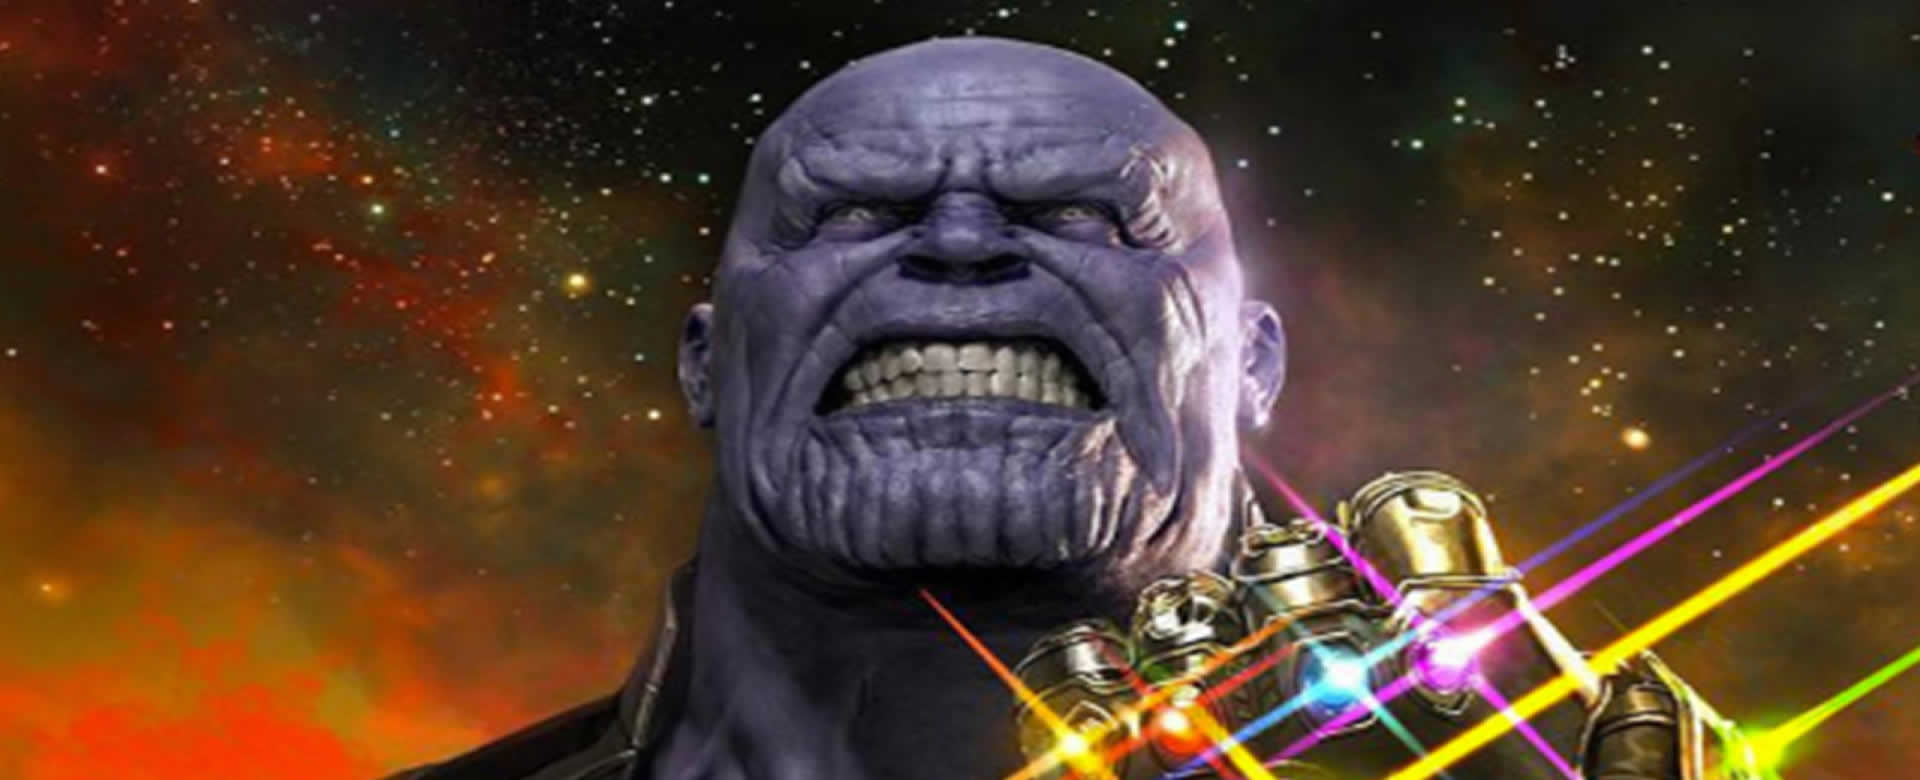 “Vengadores 4: Endgame” tiene nuevo tráiler titulado "Thanos ha ganado"